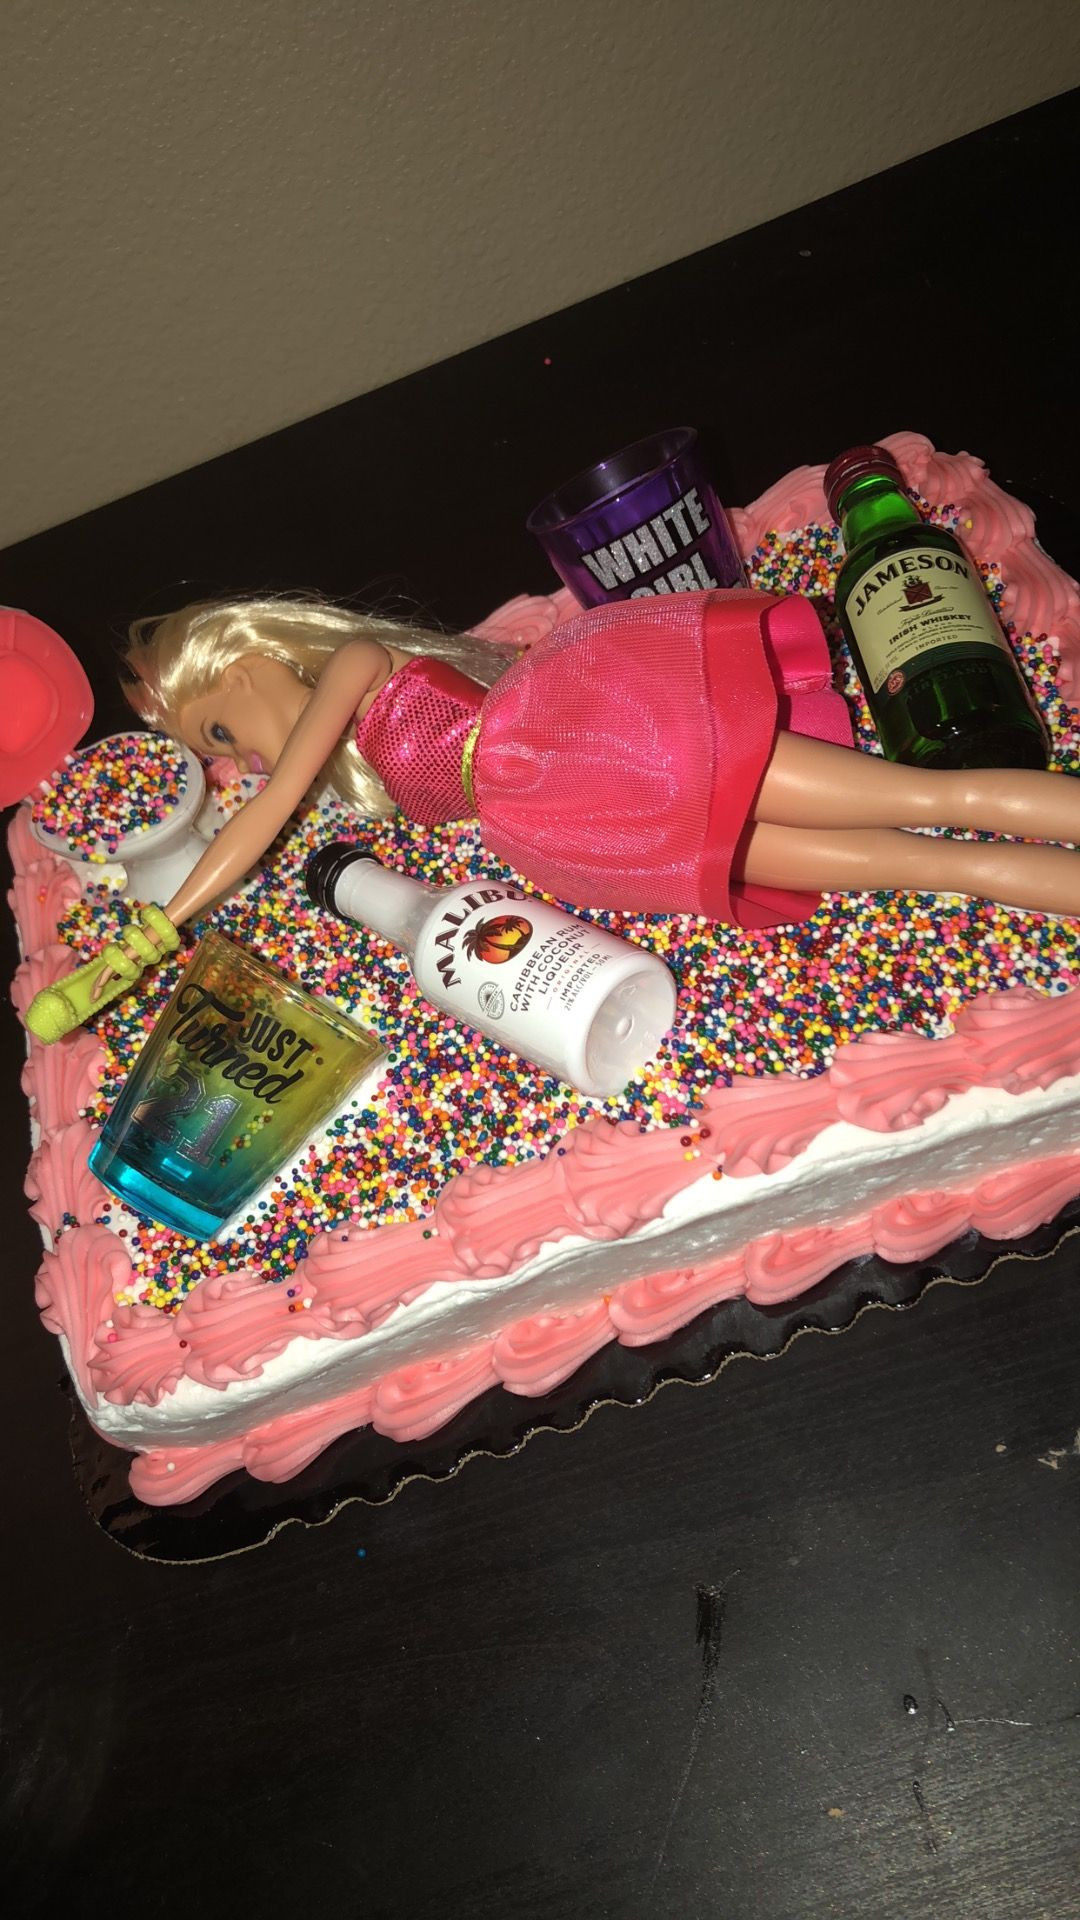 21st Birthday Cake Barbie
 Drunk barbie cake for 21st birthday drunk cake